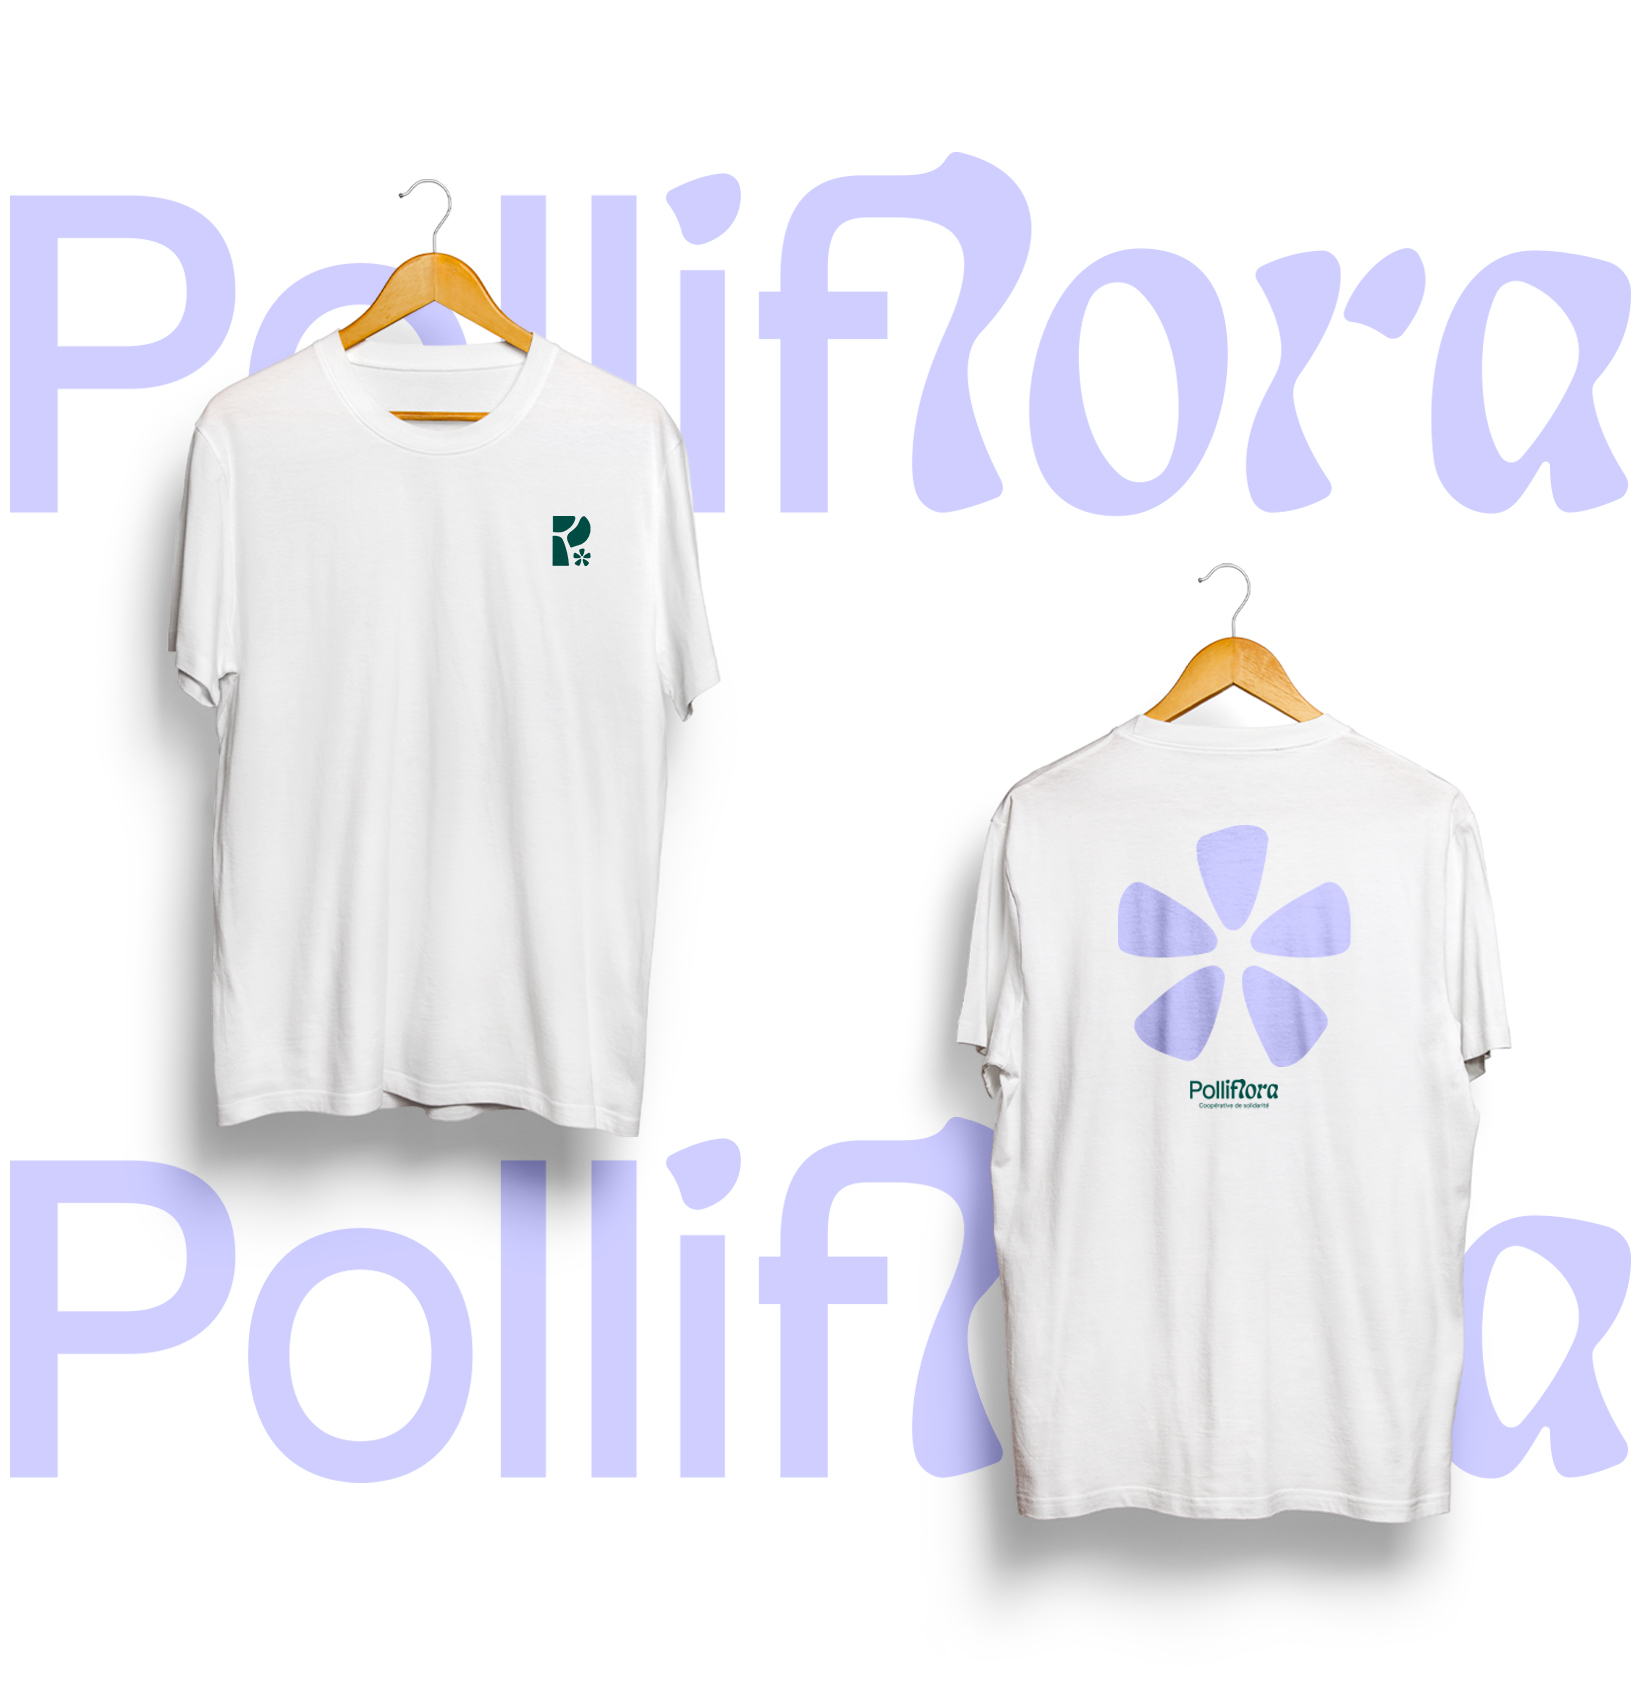 Polliflora t-shirts